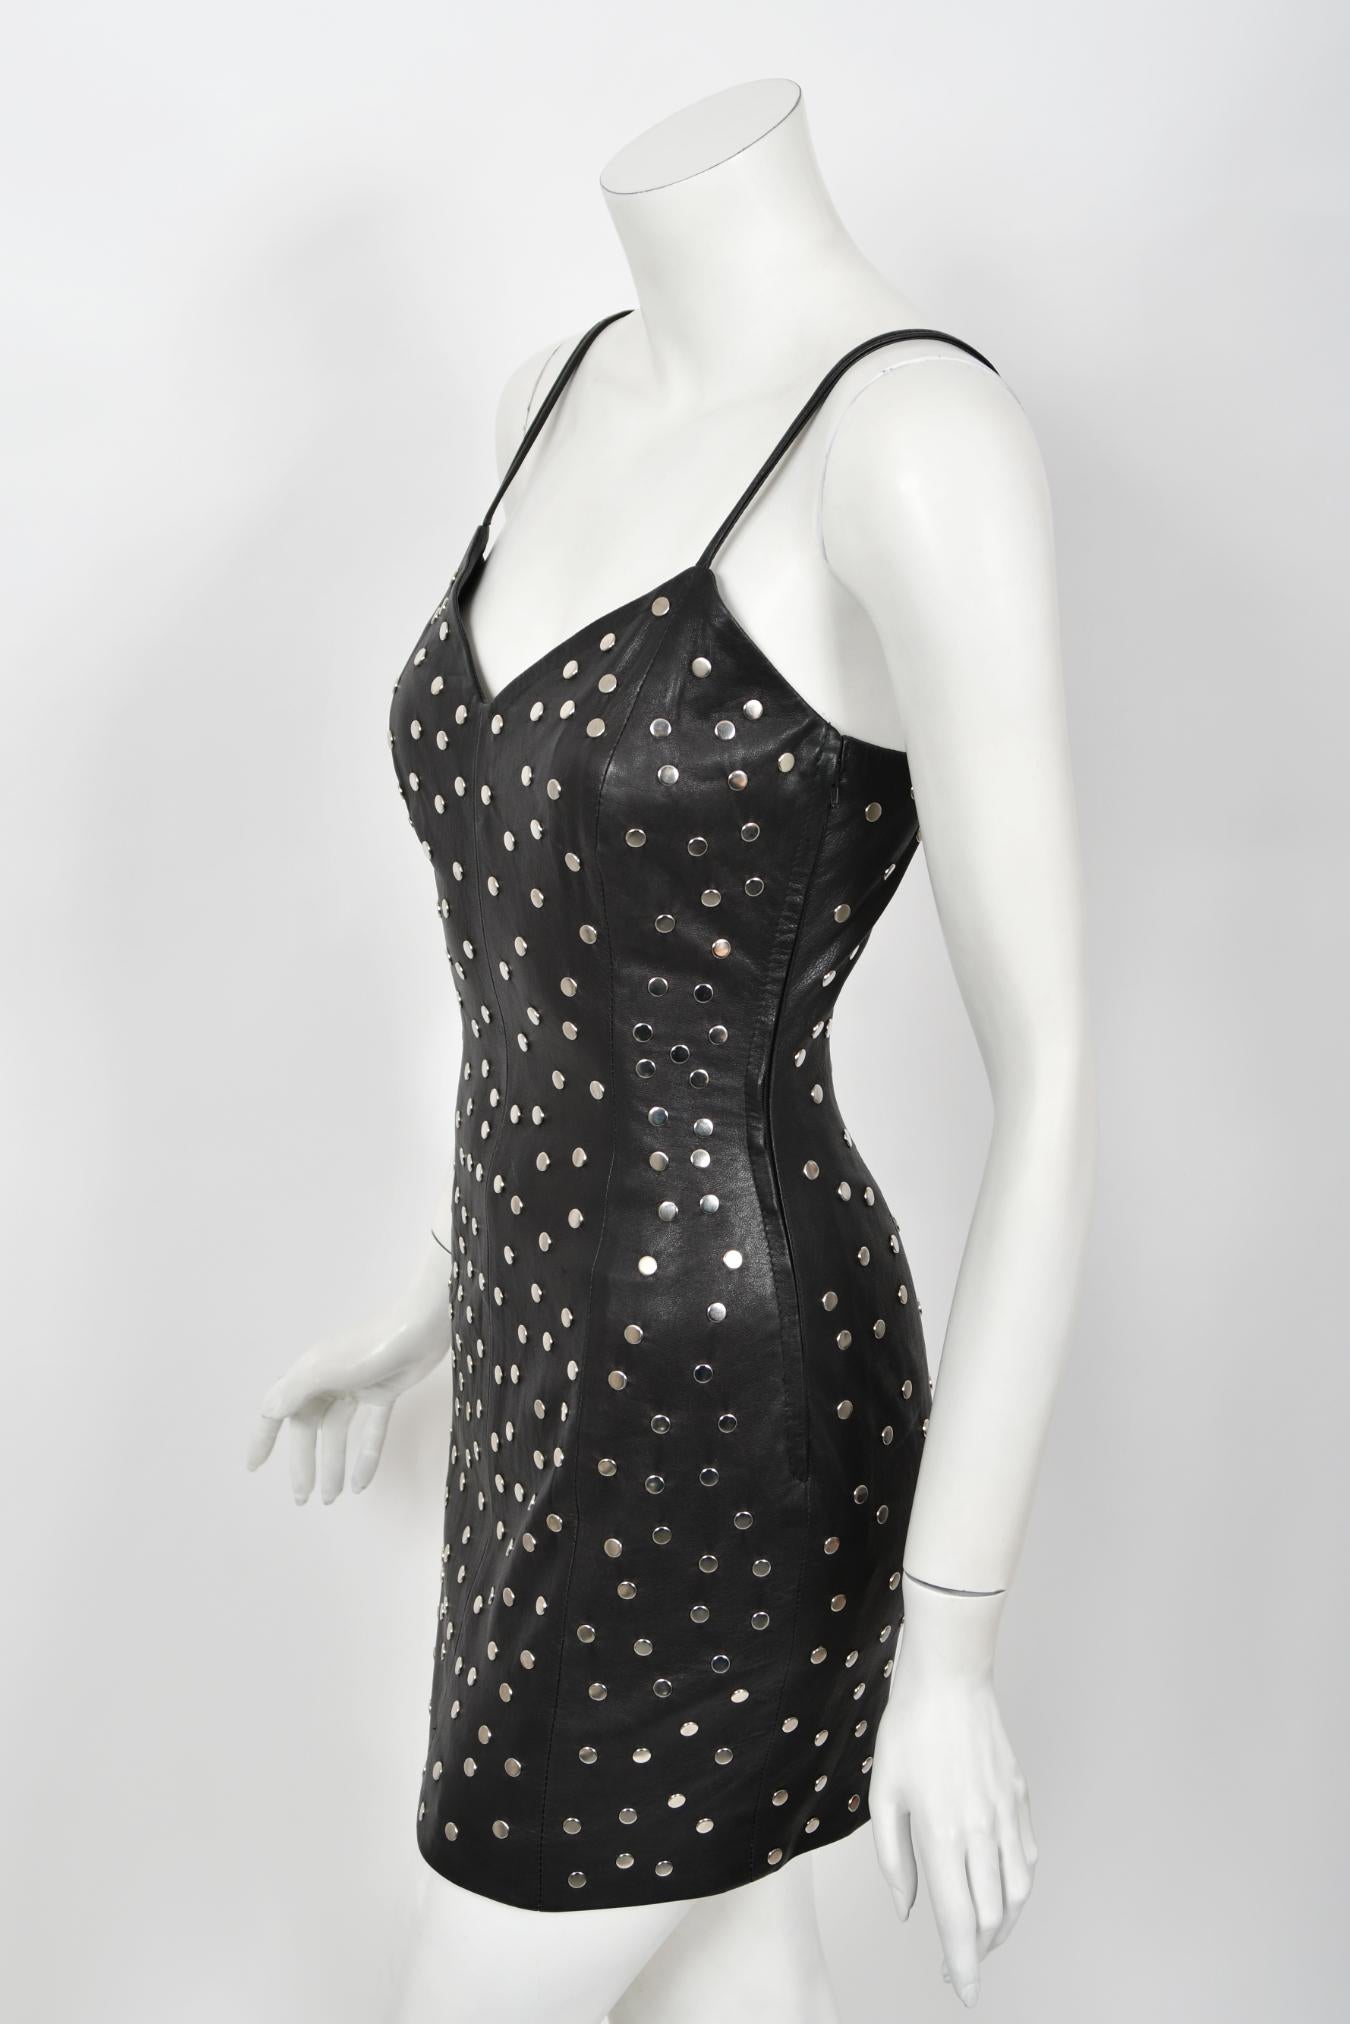 Vintage 1991 Dolce & Gabbana Documented Runway Studded Black Leather Mini Dress For Sale 5